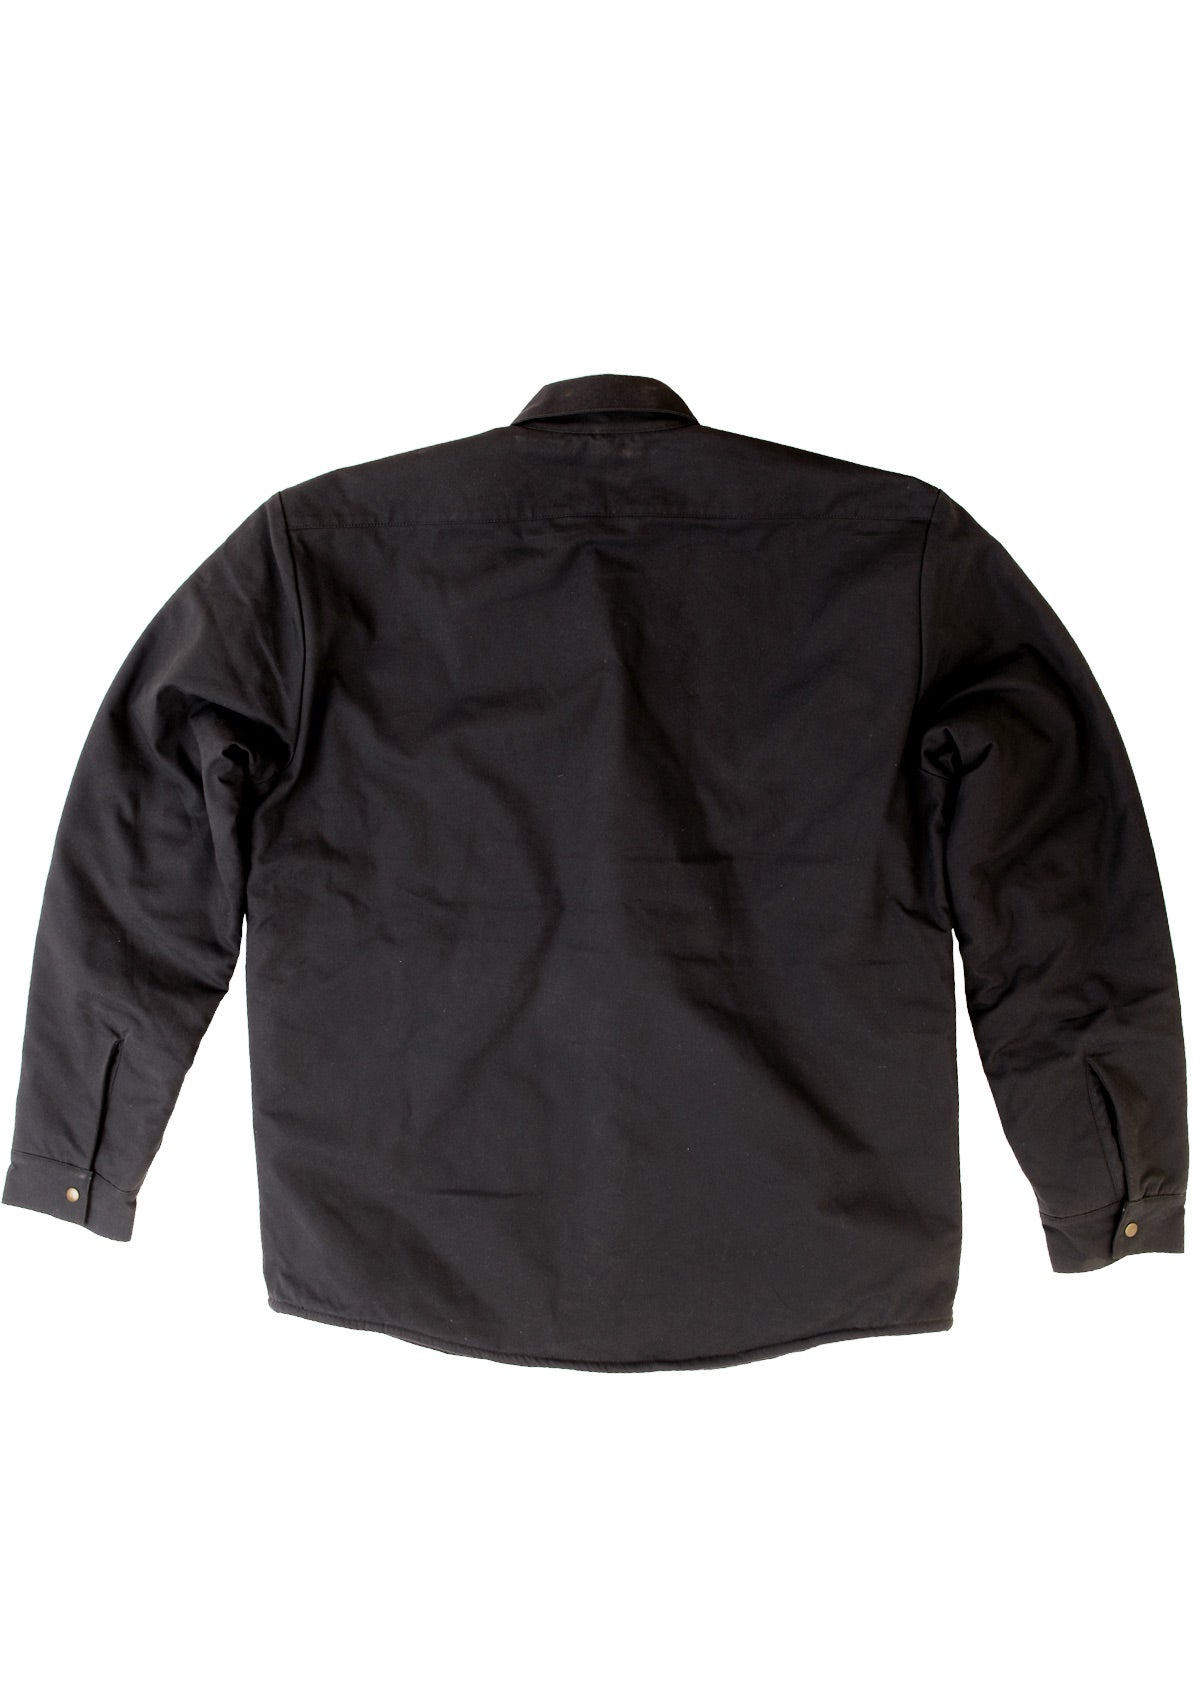 Organic Cotton / Wool Insulated Jacket - Twilight Tan | needessentials